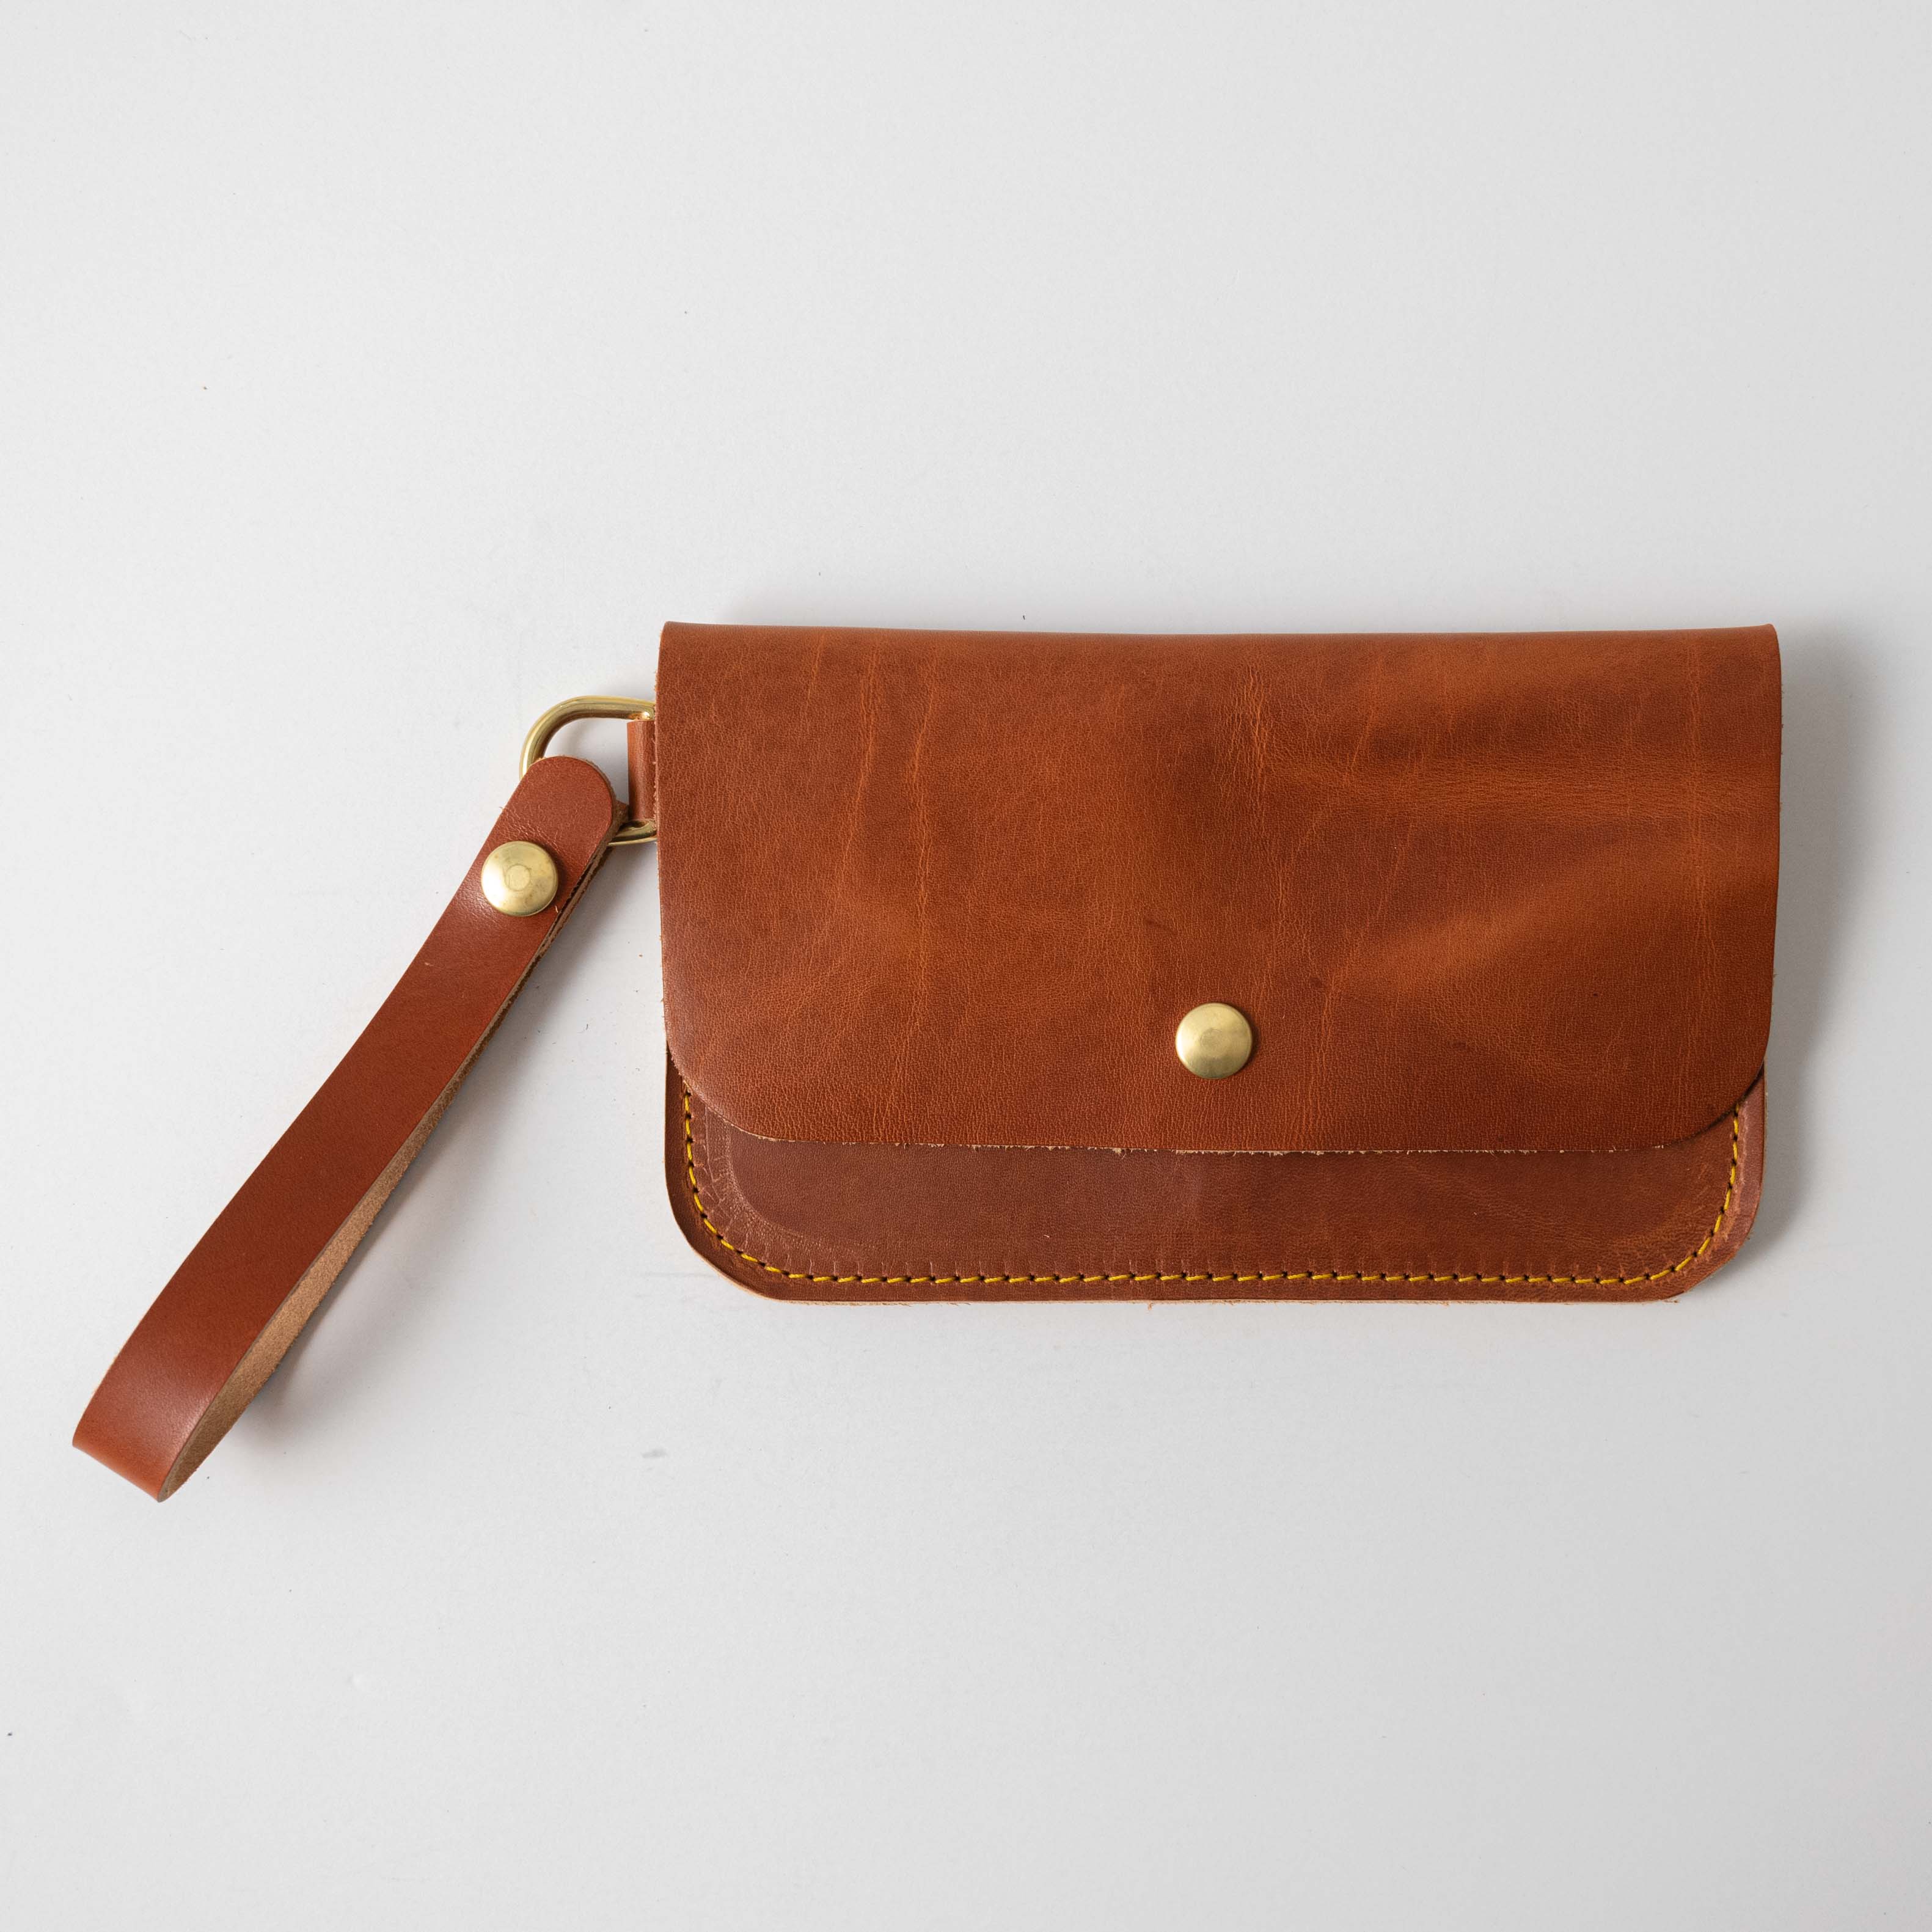 New vintage leather wallet women simple clutch bag handmade vertical female  long wallet personality card holder wallets ladies